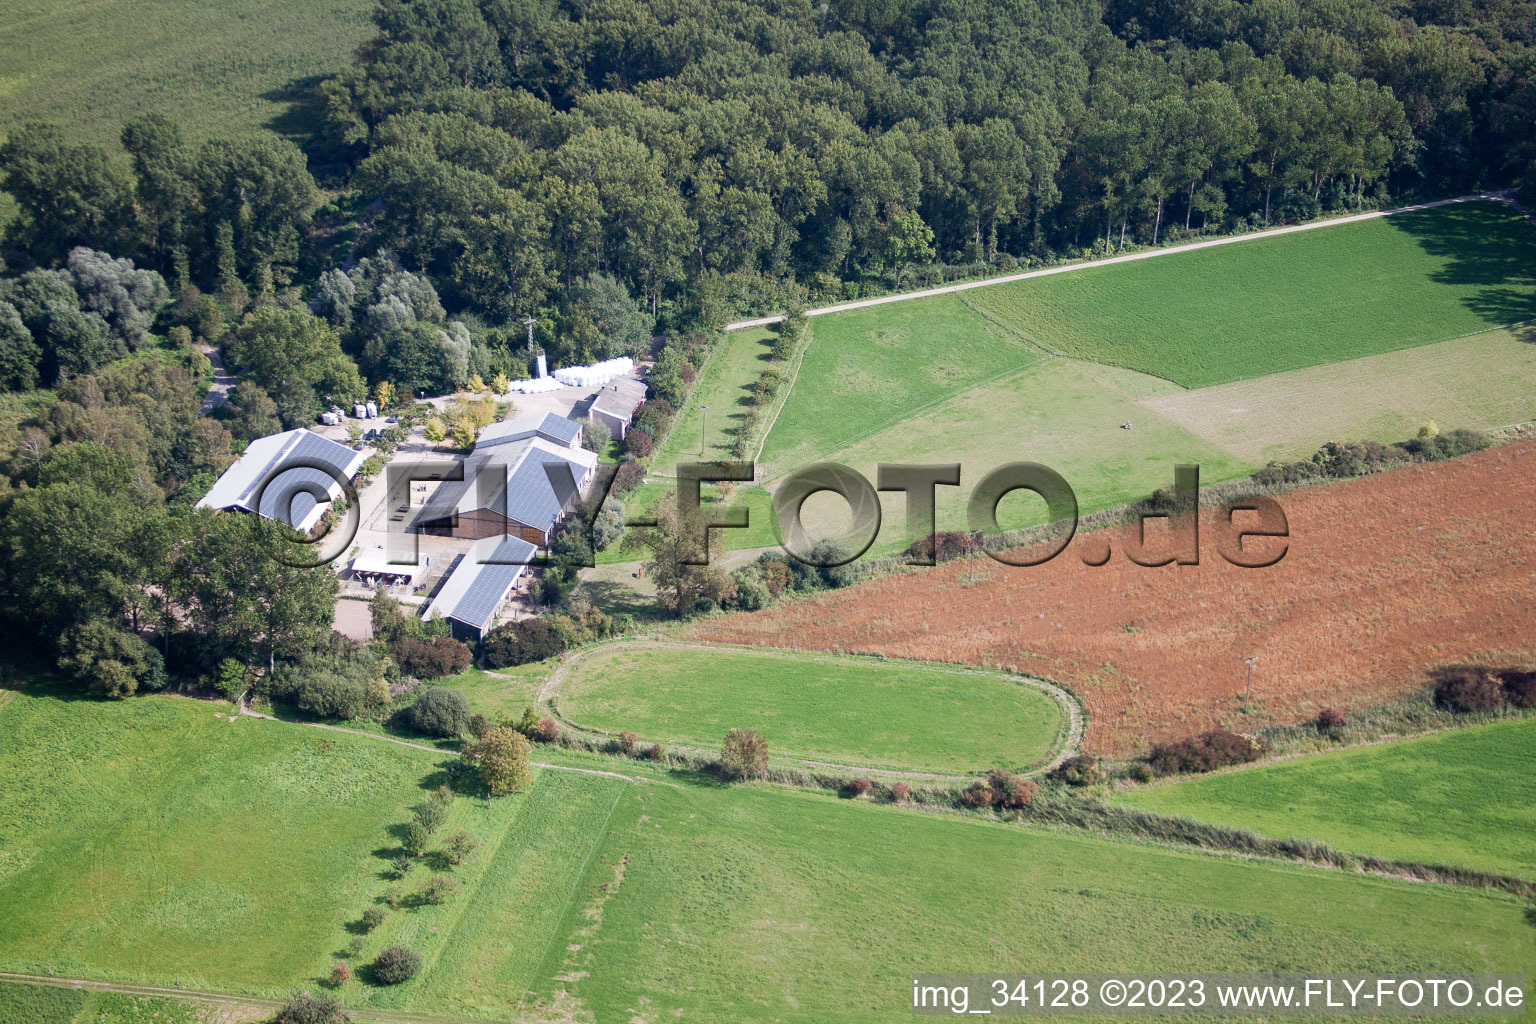 Kennelhof in the district Sondernheim in Germersheim in the state Rhineland-Palatinate, Germany seen from above